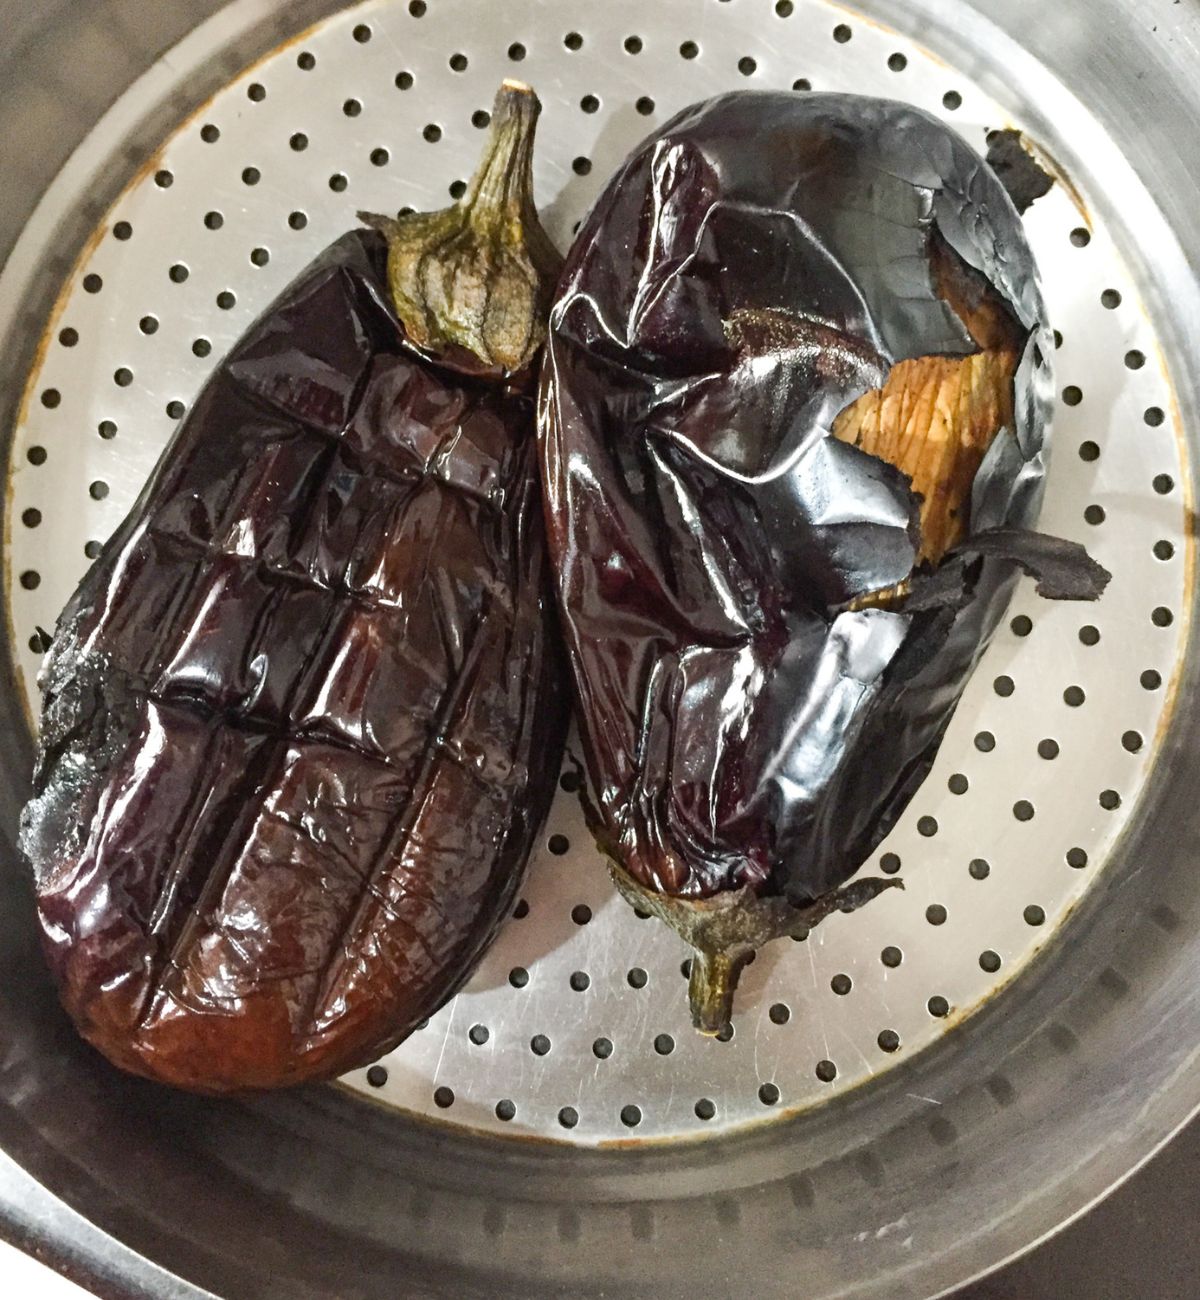 Two large purple eggplant/ brinjal/ aubergine with stalks, char roasted with skin peeling off. On a steel colander